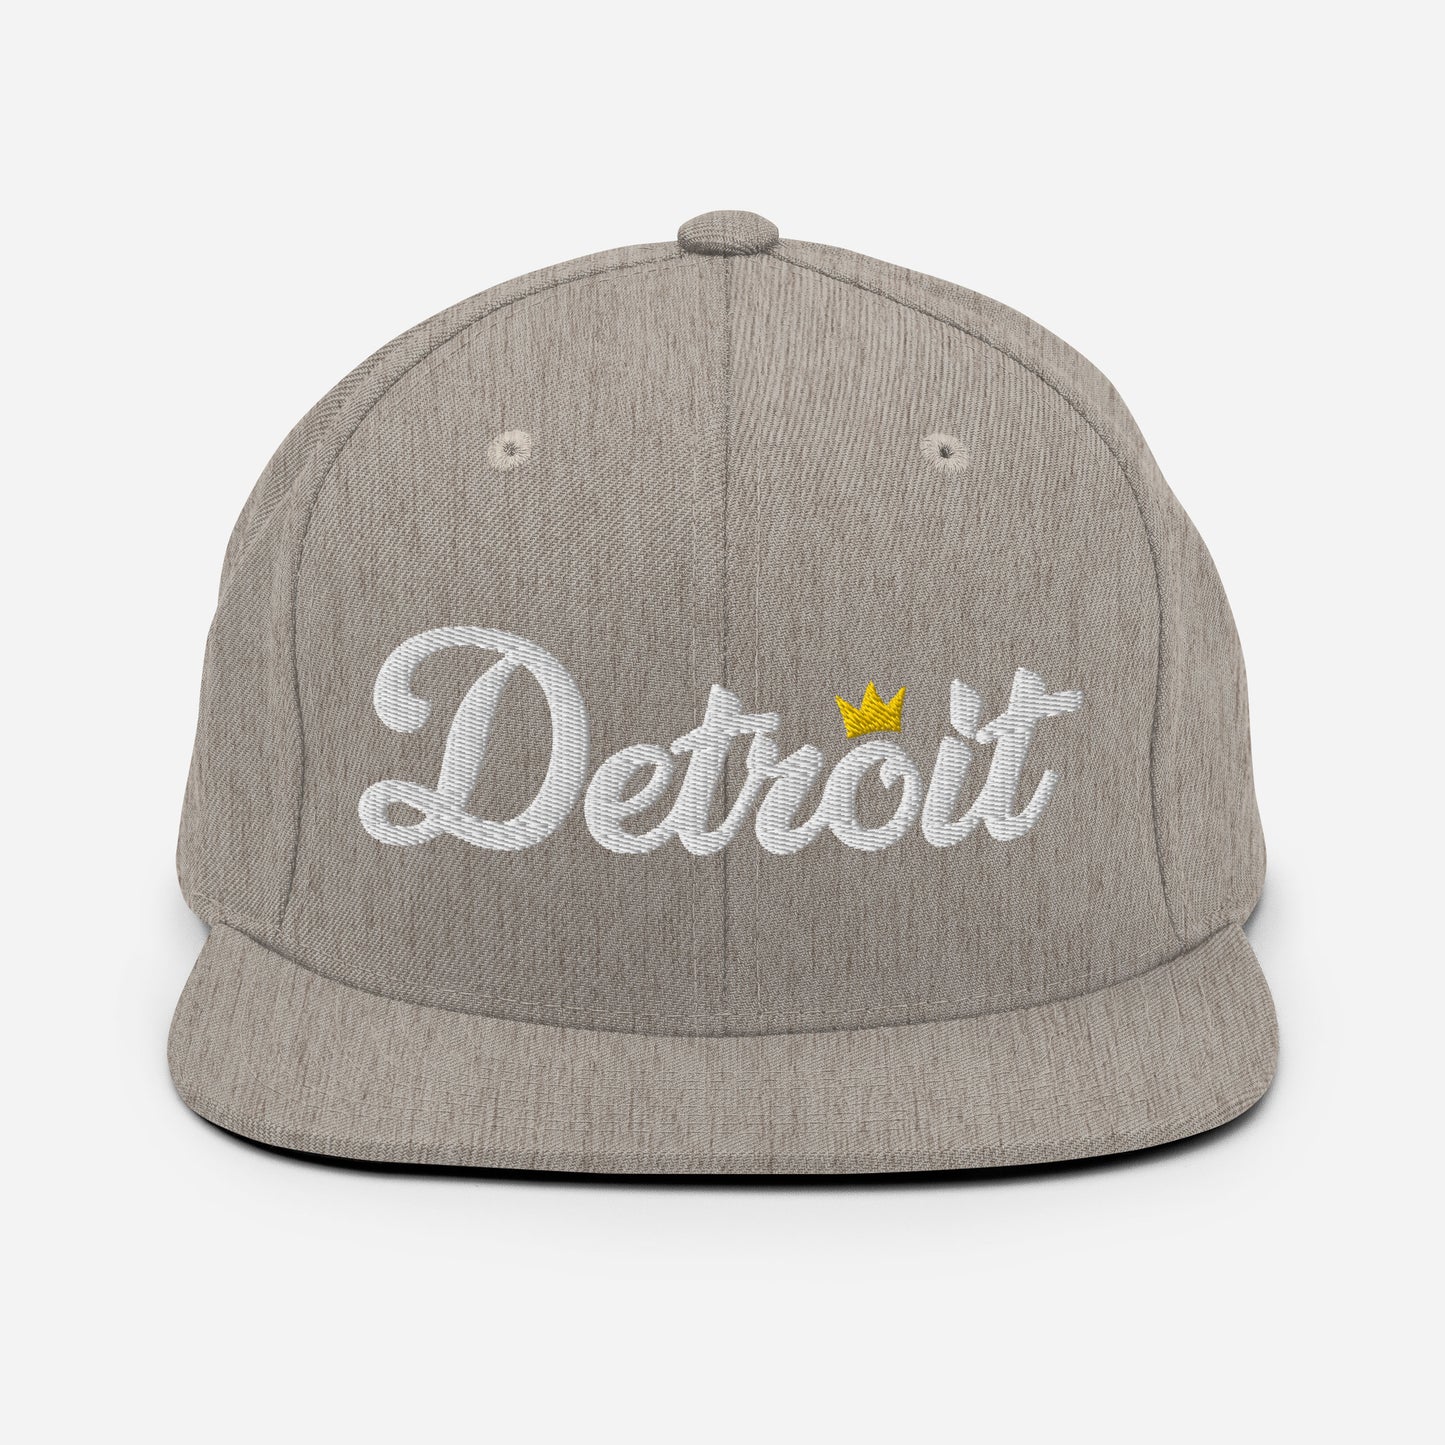 Detroit Cap